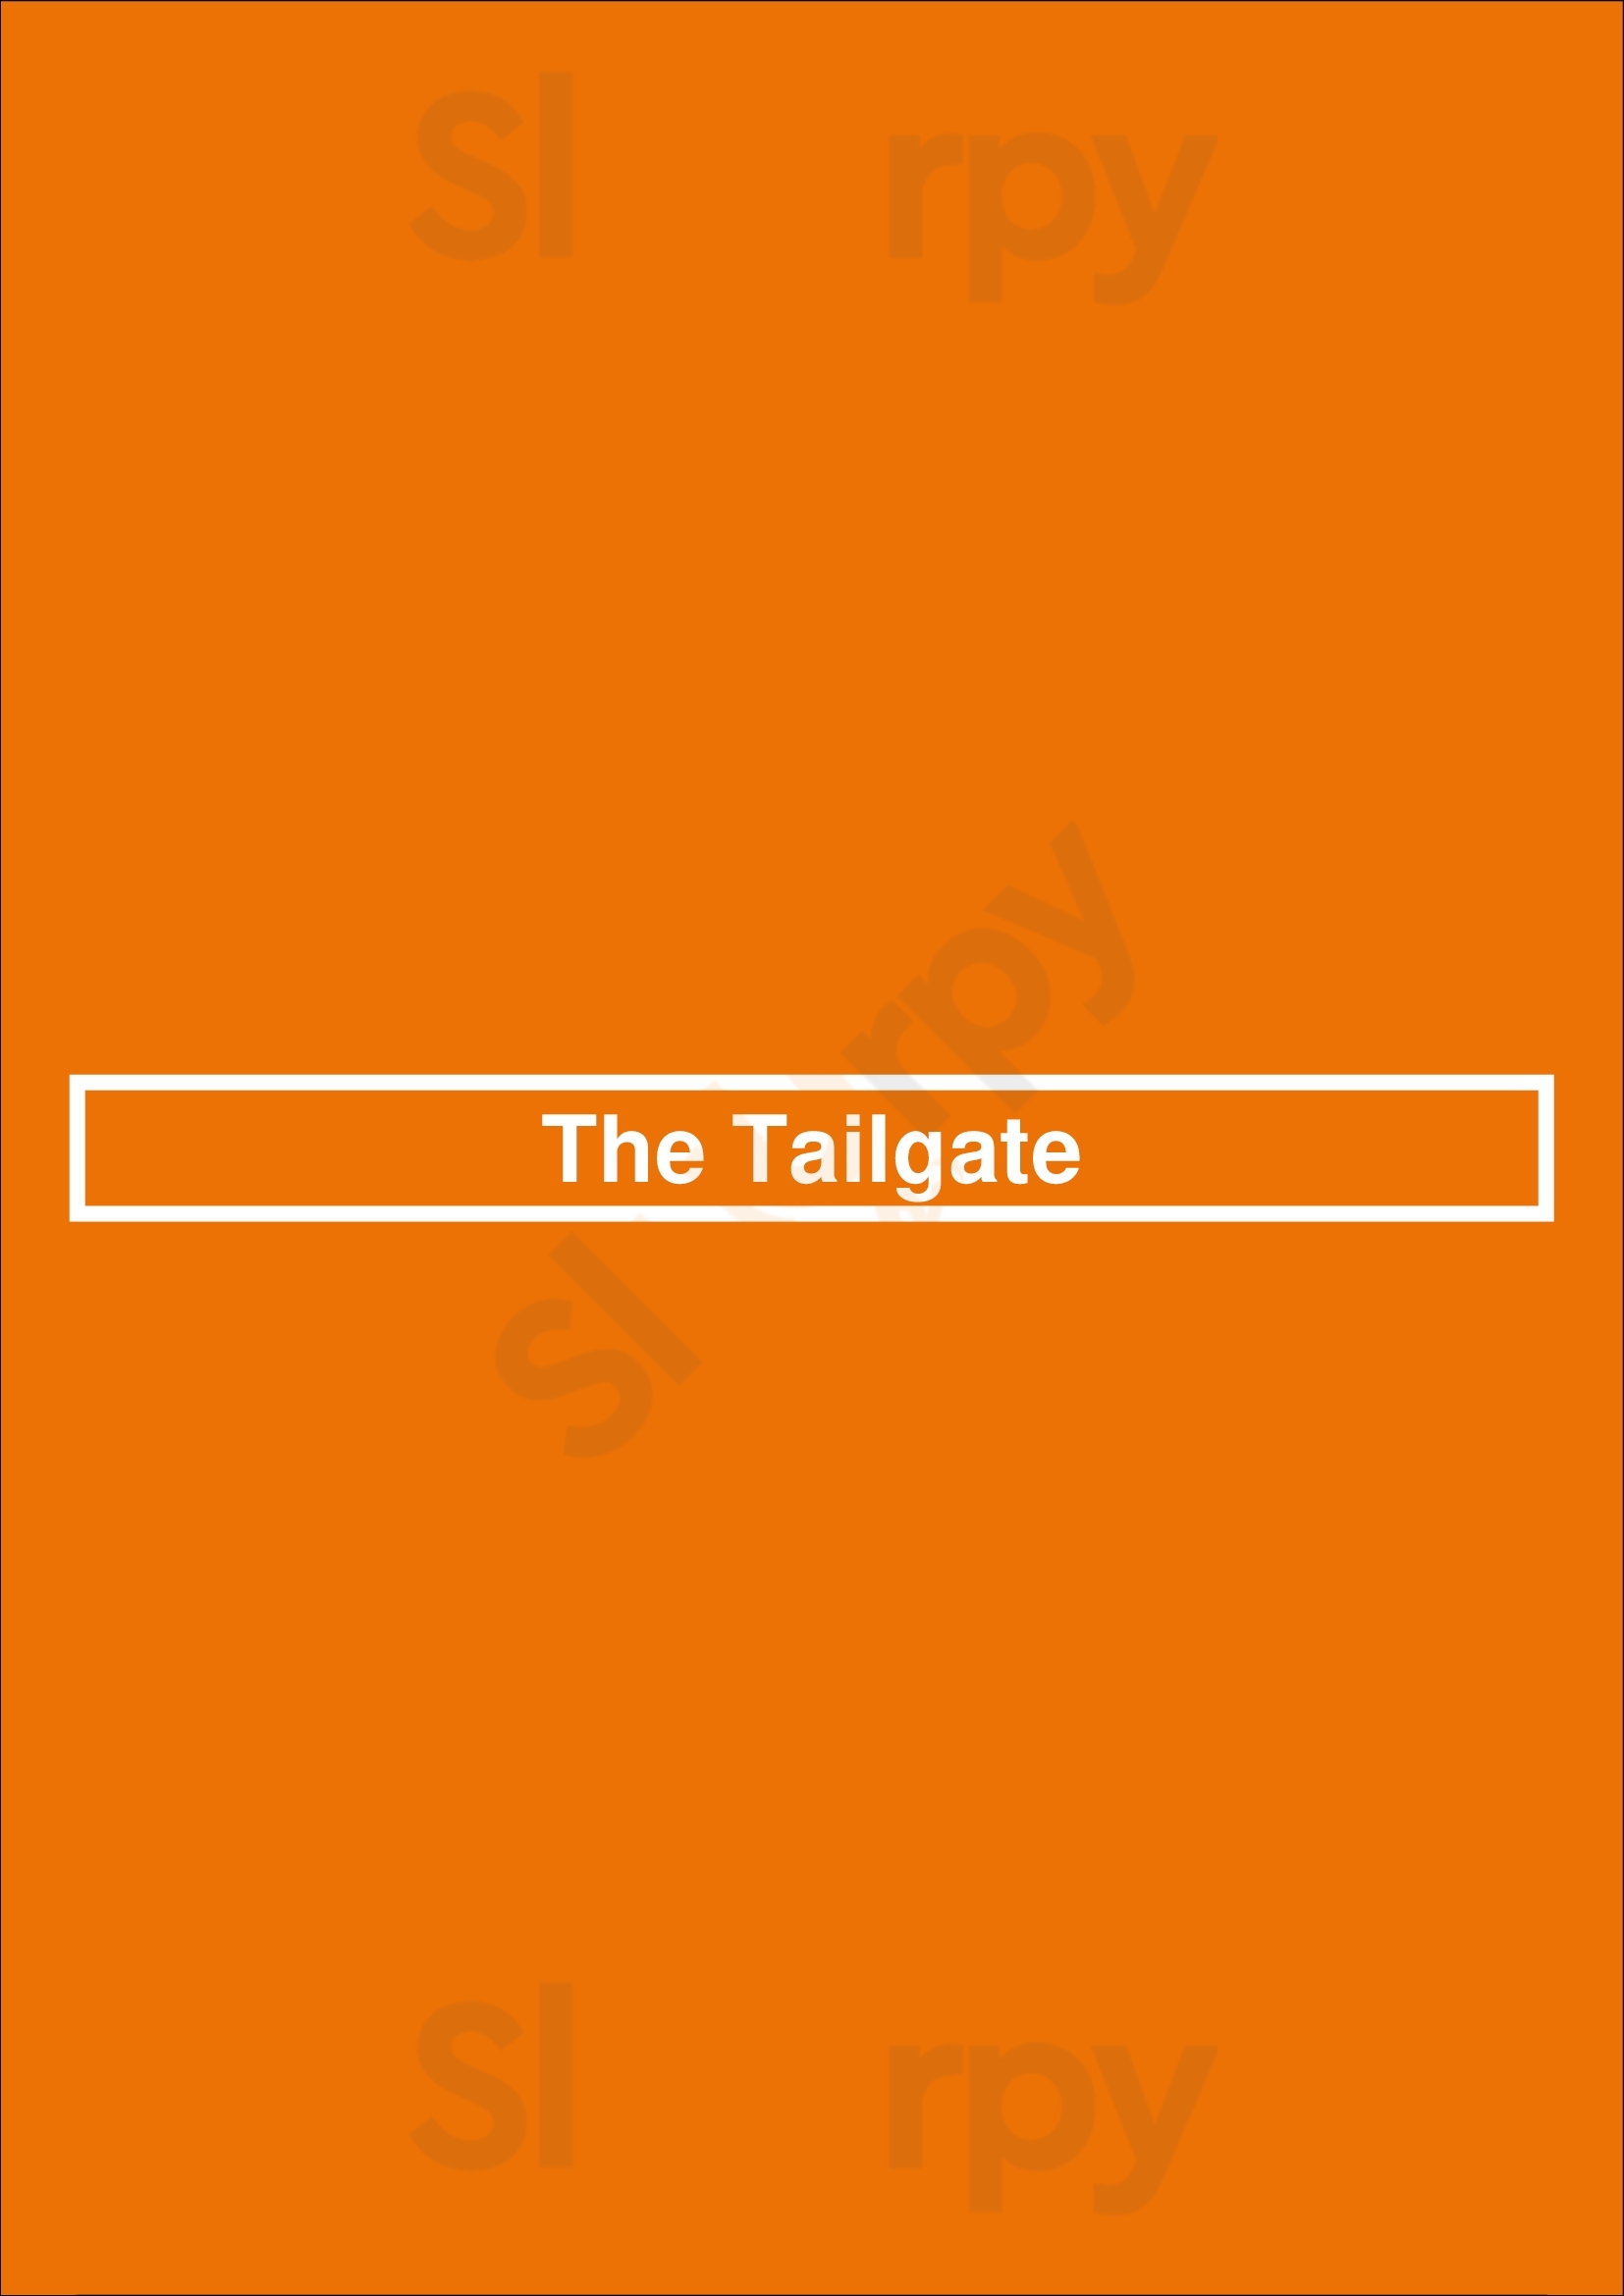 The Tailgate Indianapolis Menu - 1